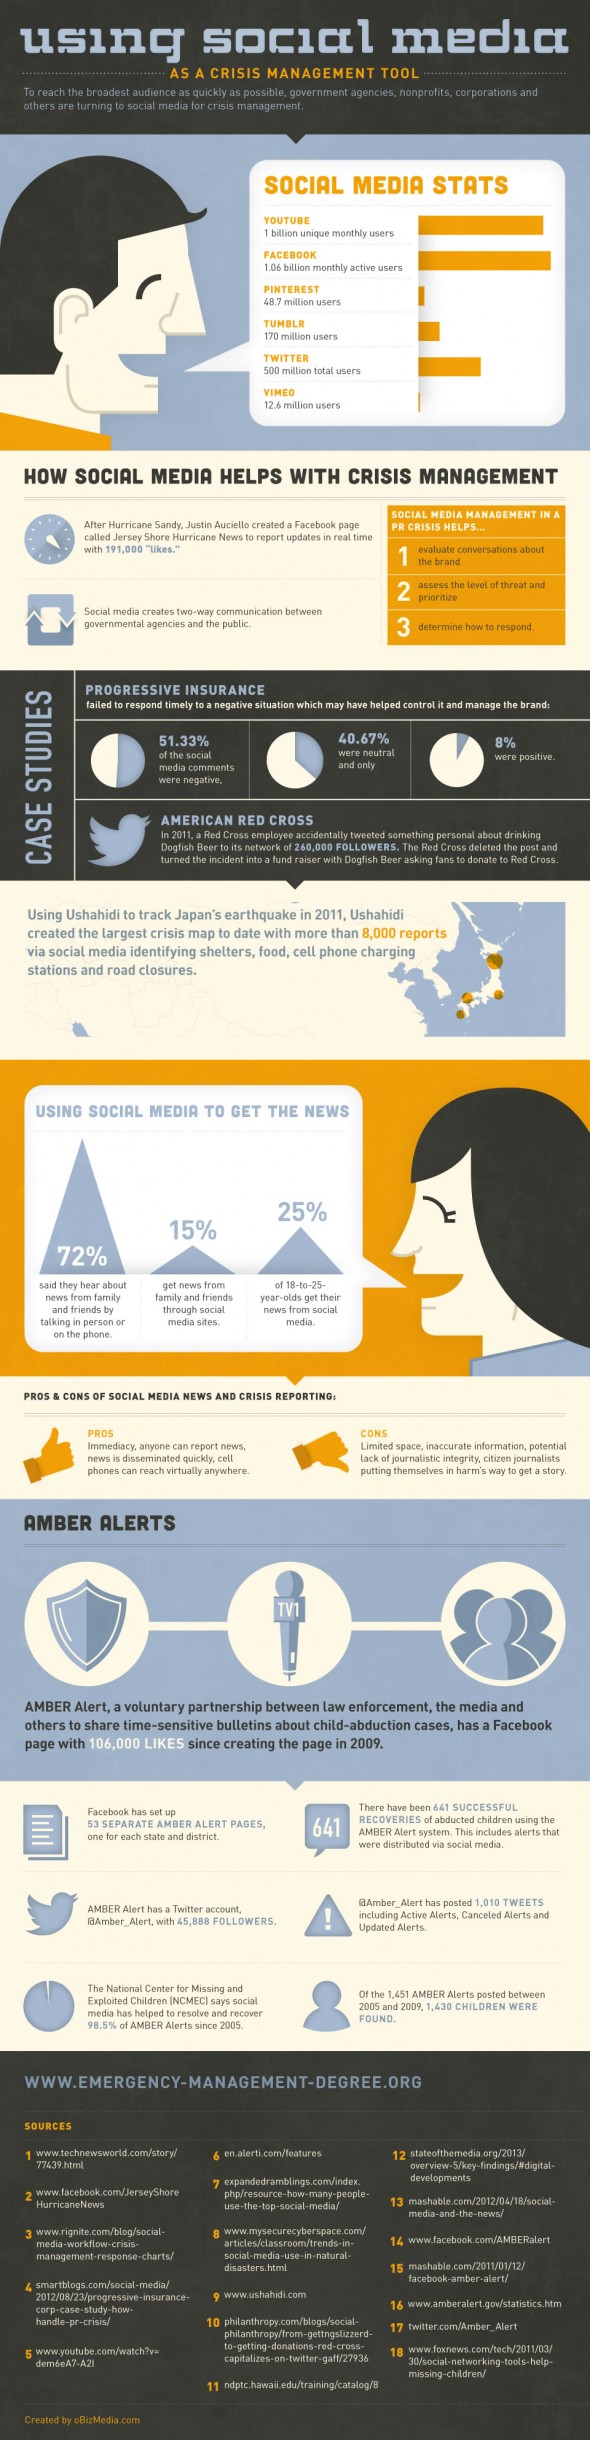 social-media-crisis-infographic-590x2440